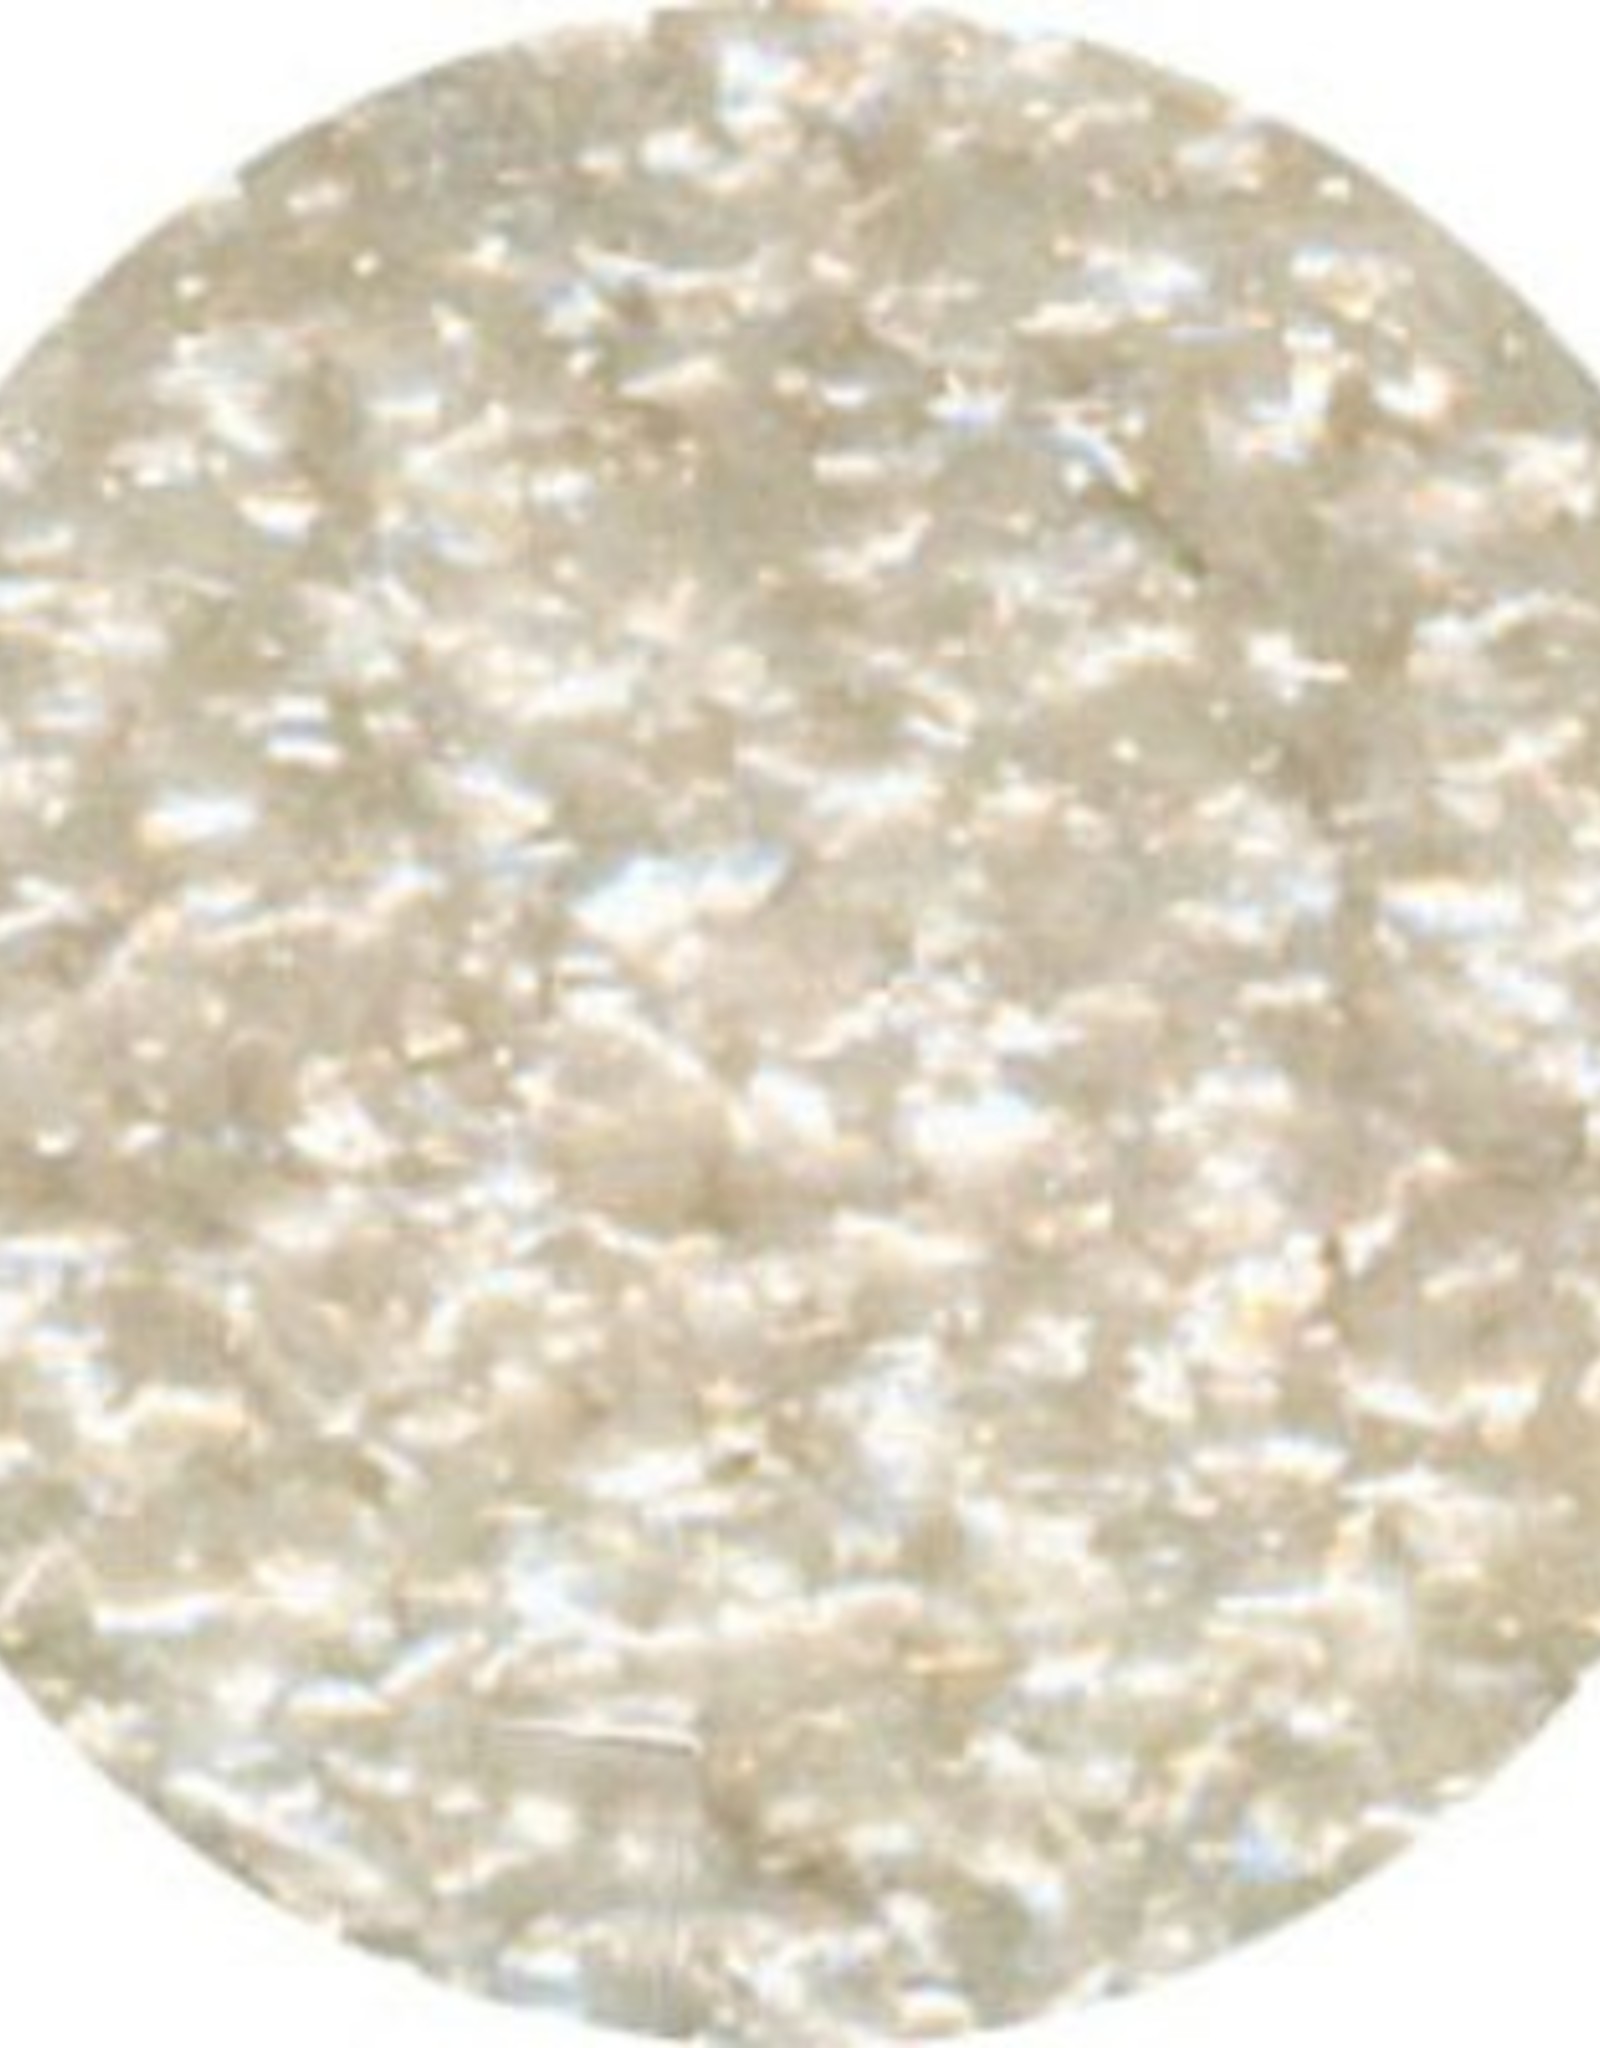 Edible Glitter (White 4 oz)